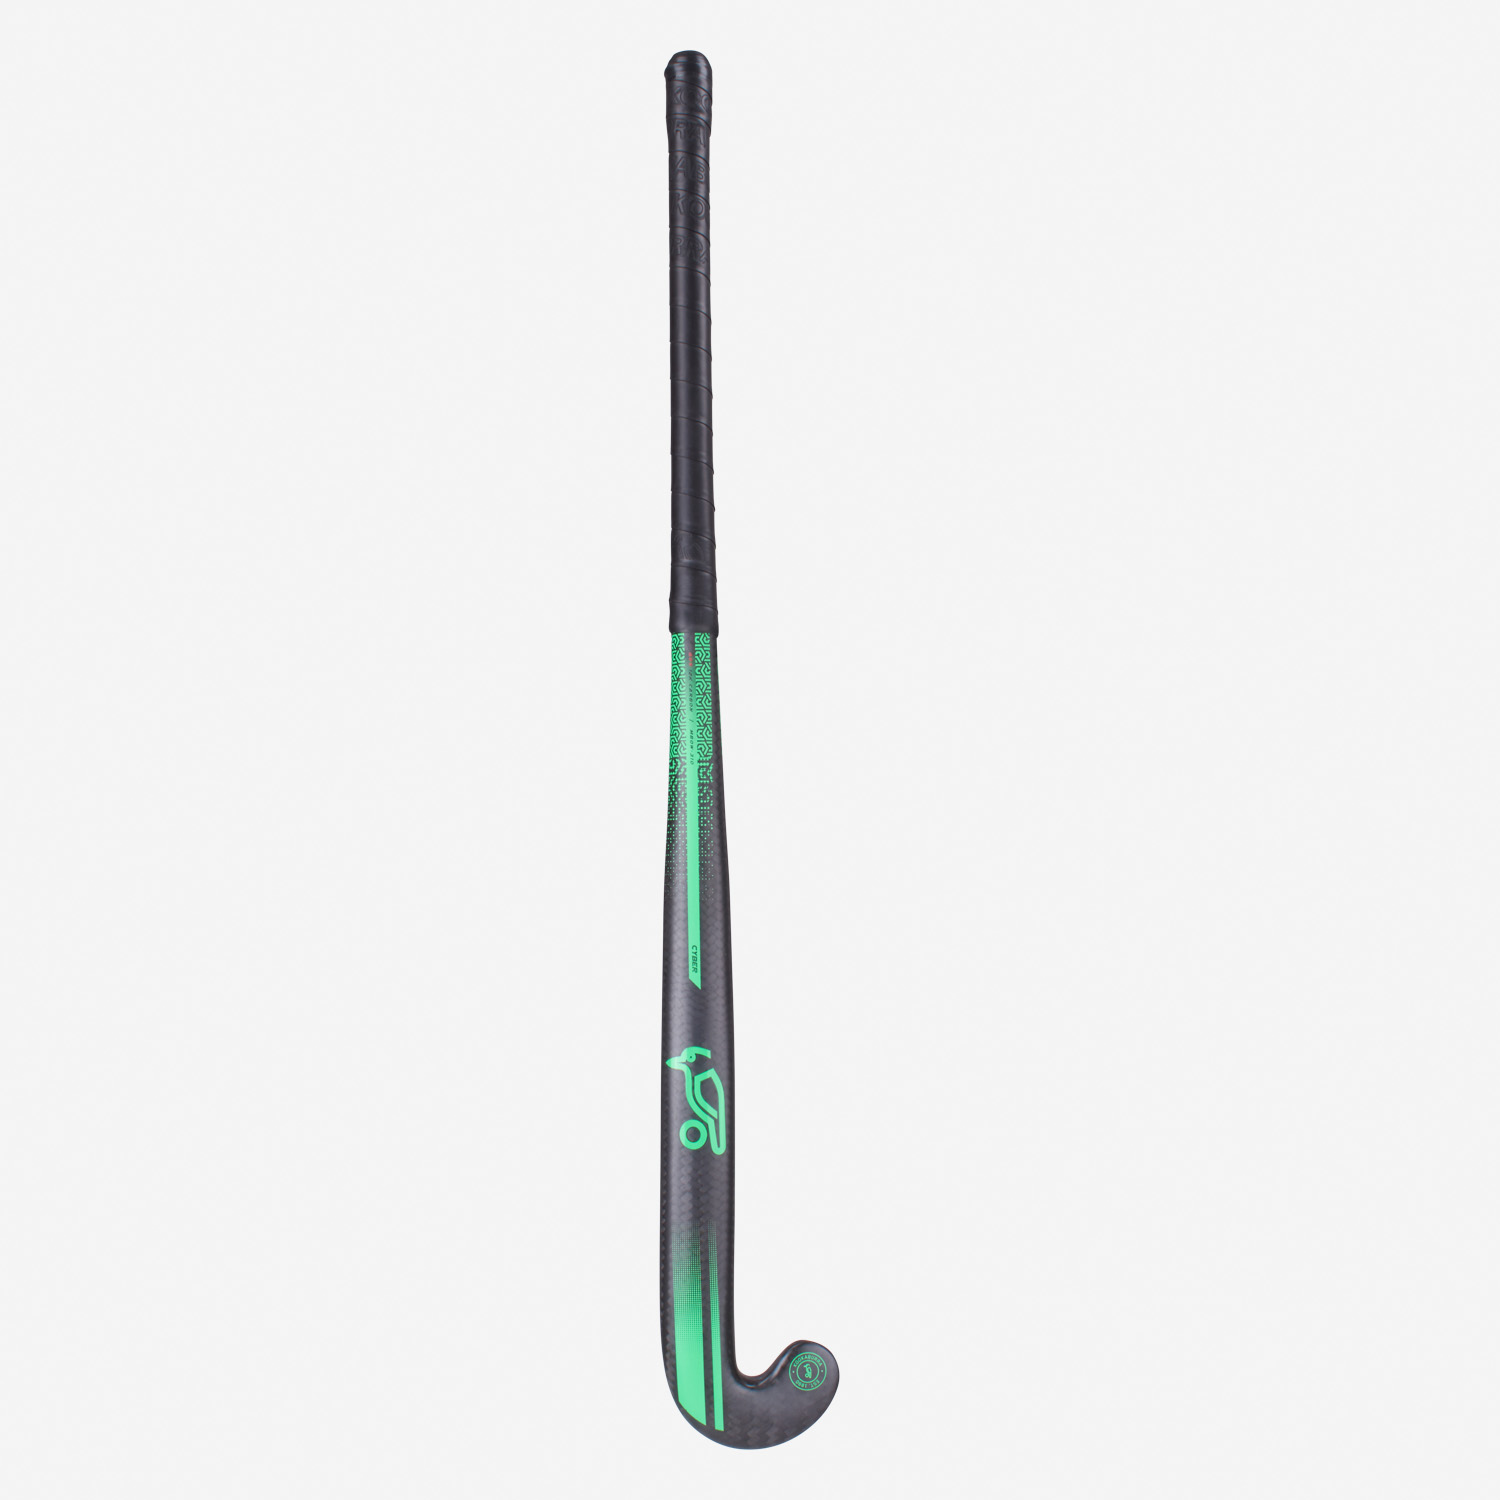 MBow Cyber Hockey Stick